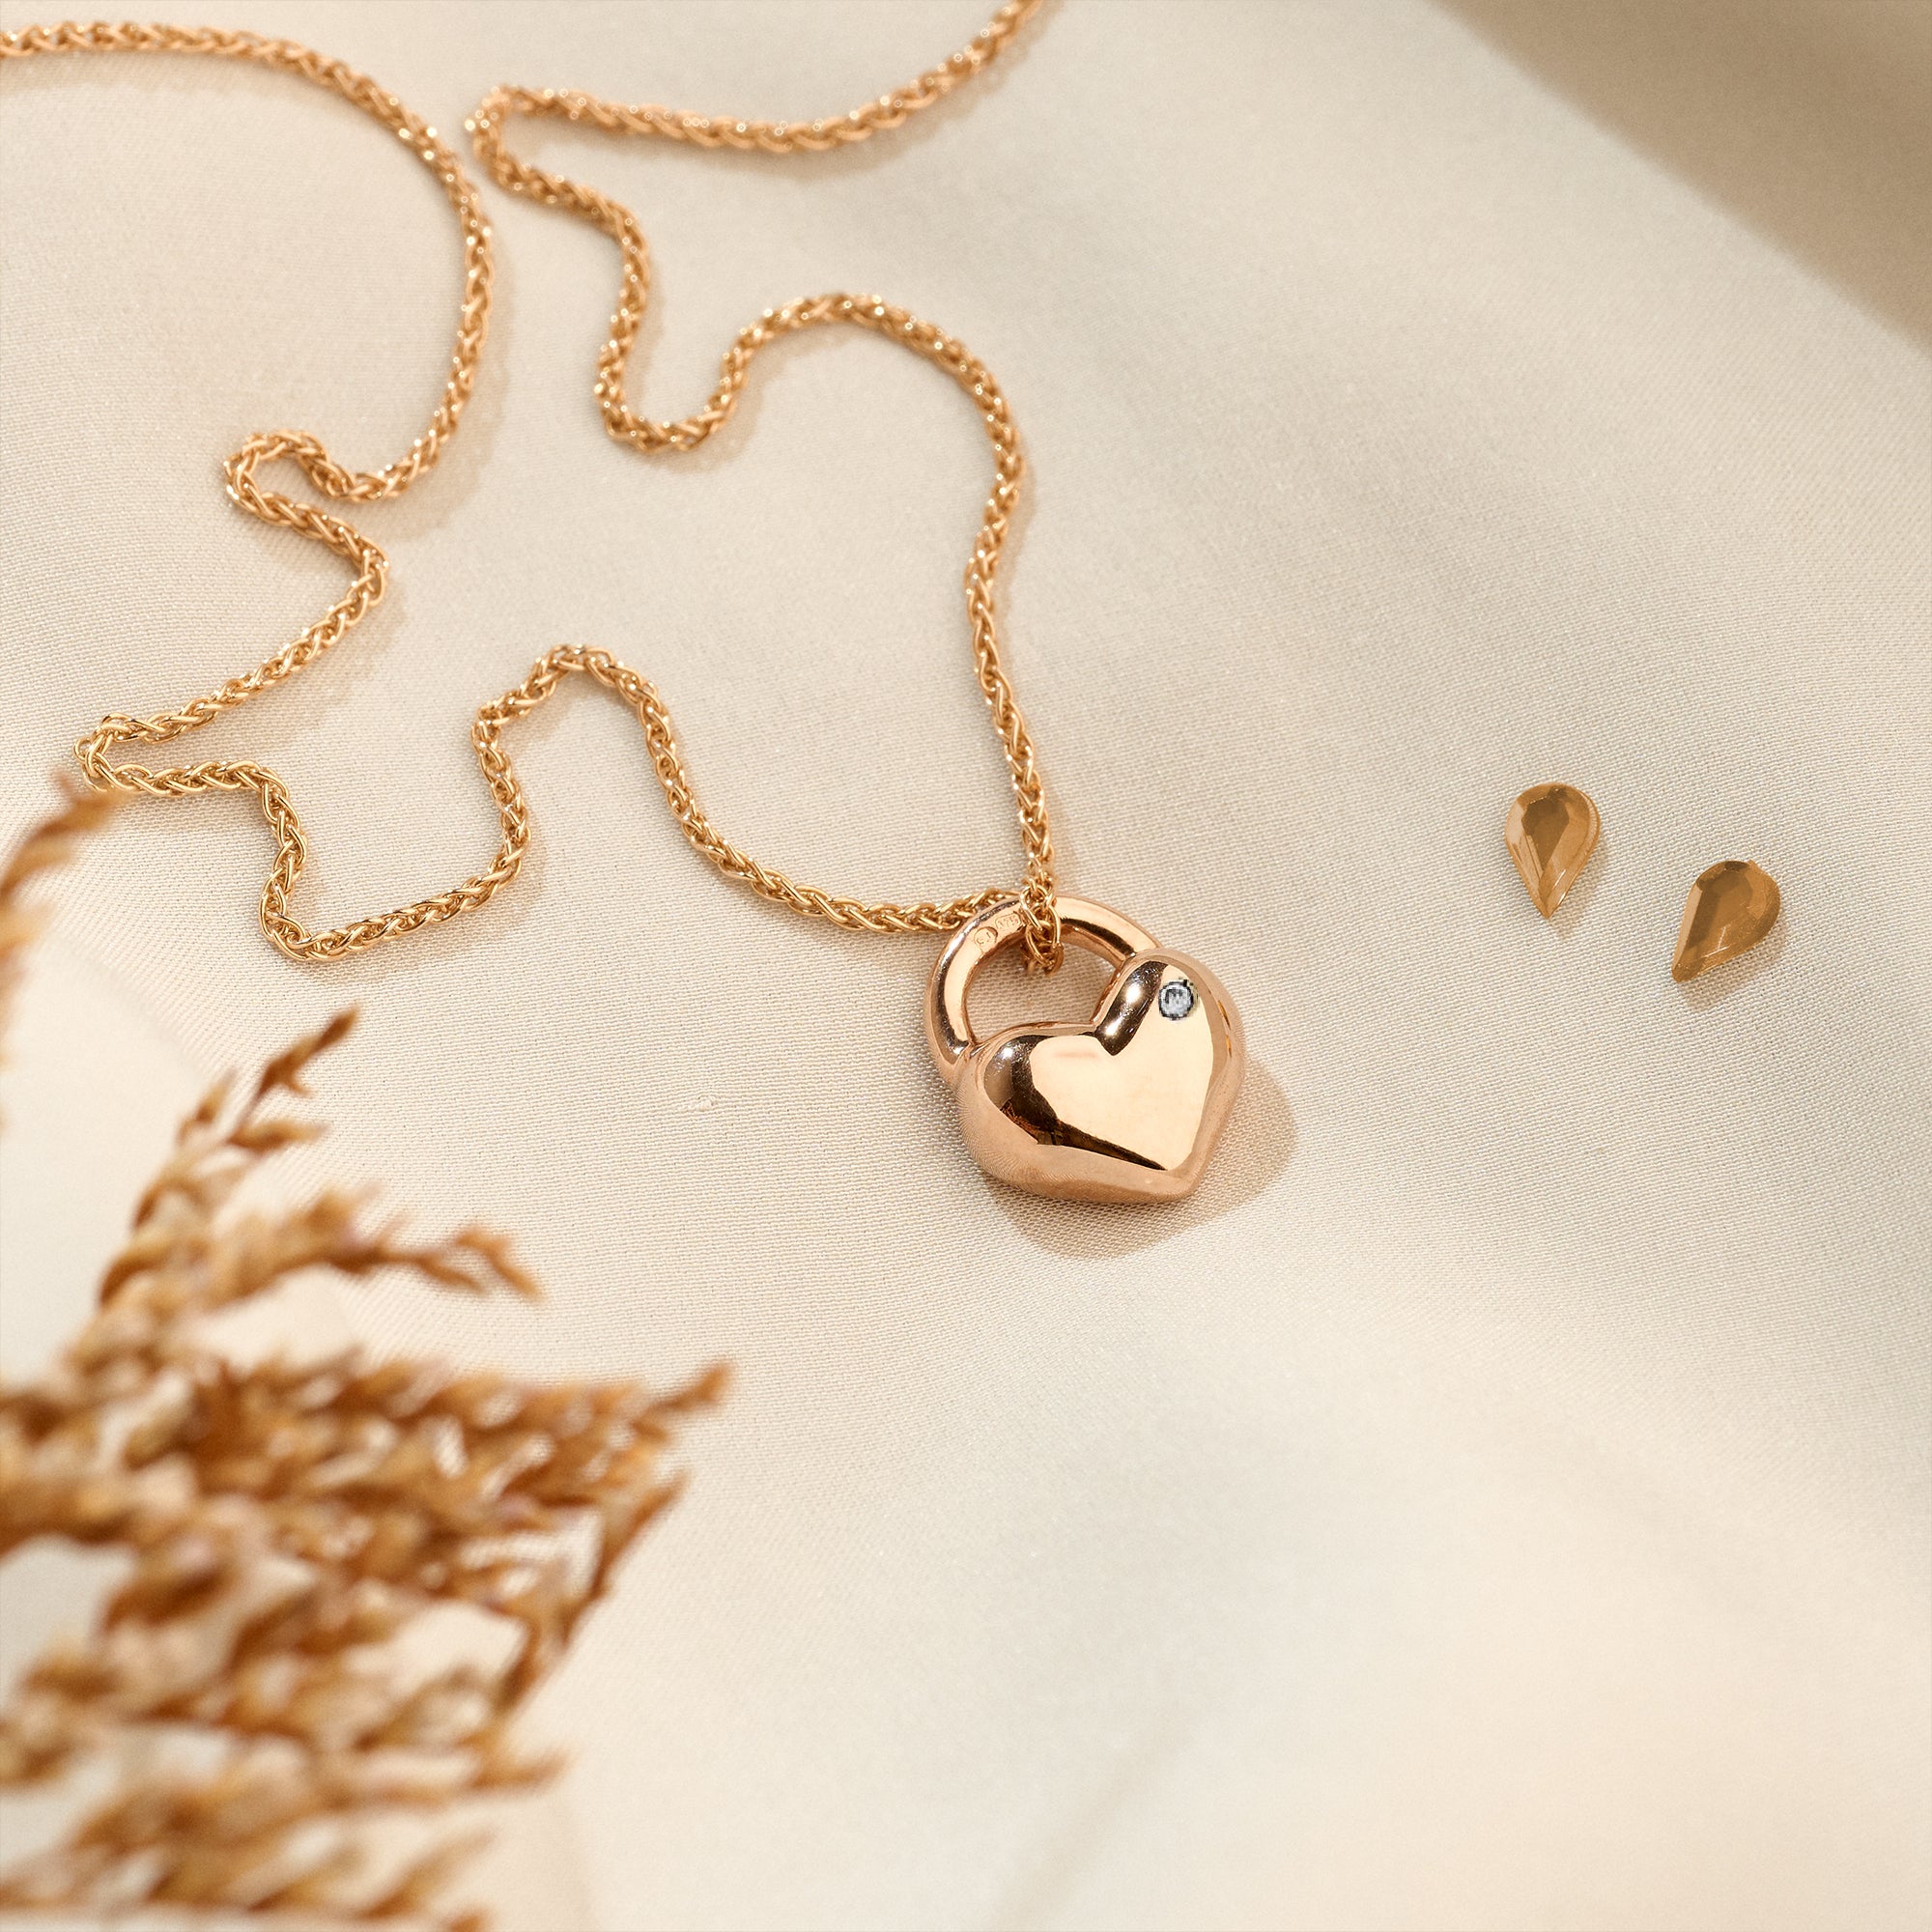 Rose gold heart necklace with diamond scarlett jewellery